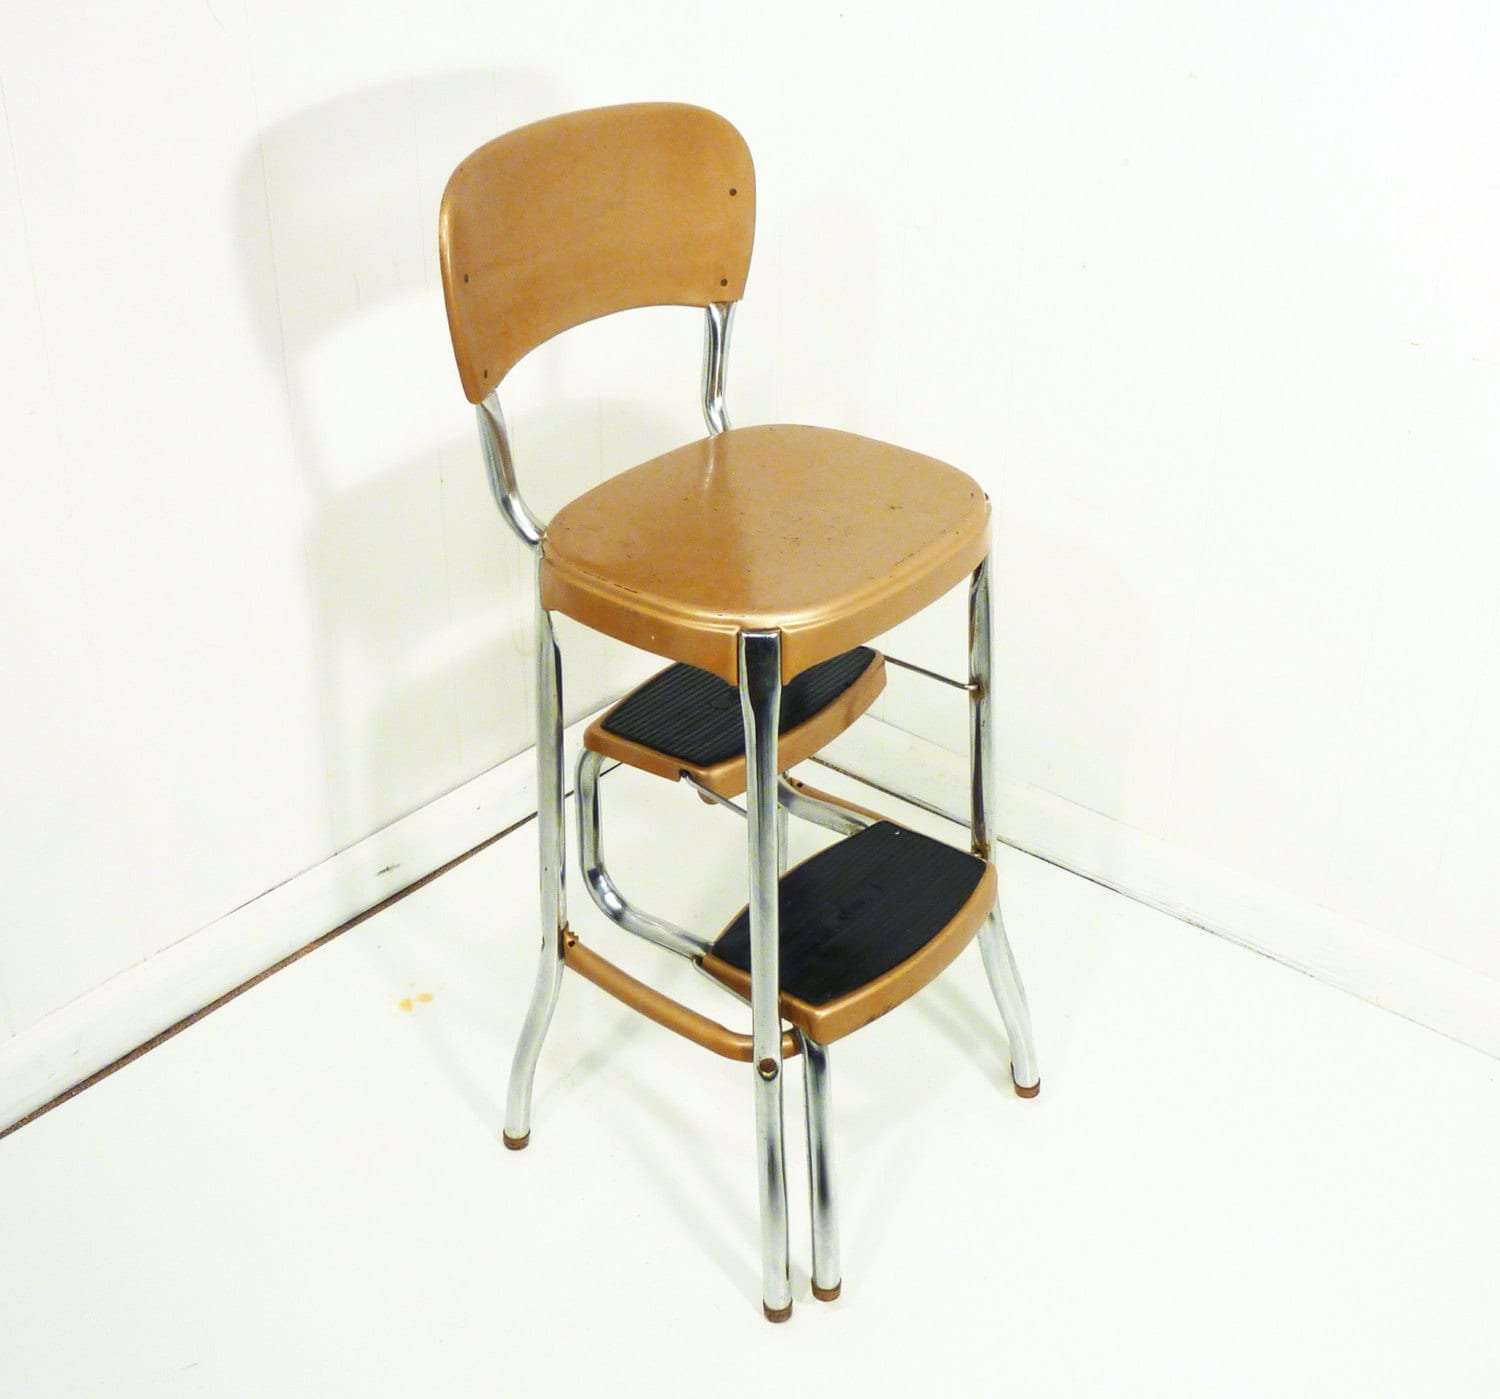 retro 50s vintage step stool kitchen stool chair